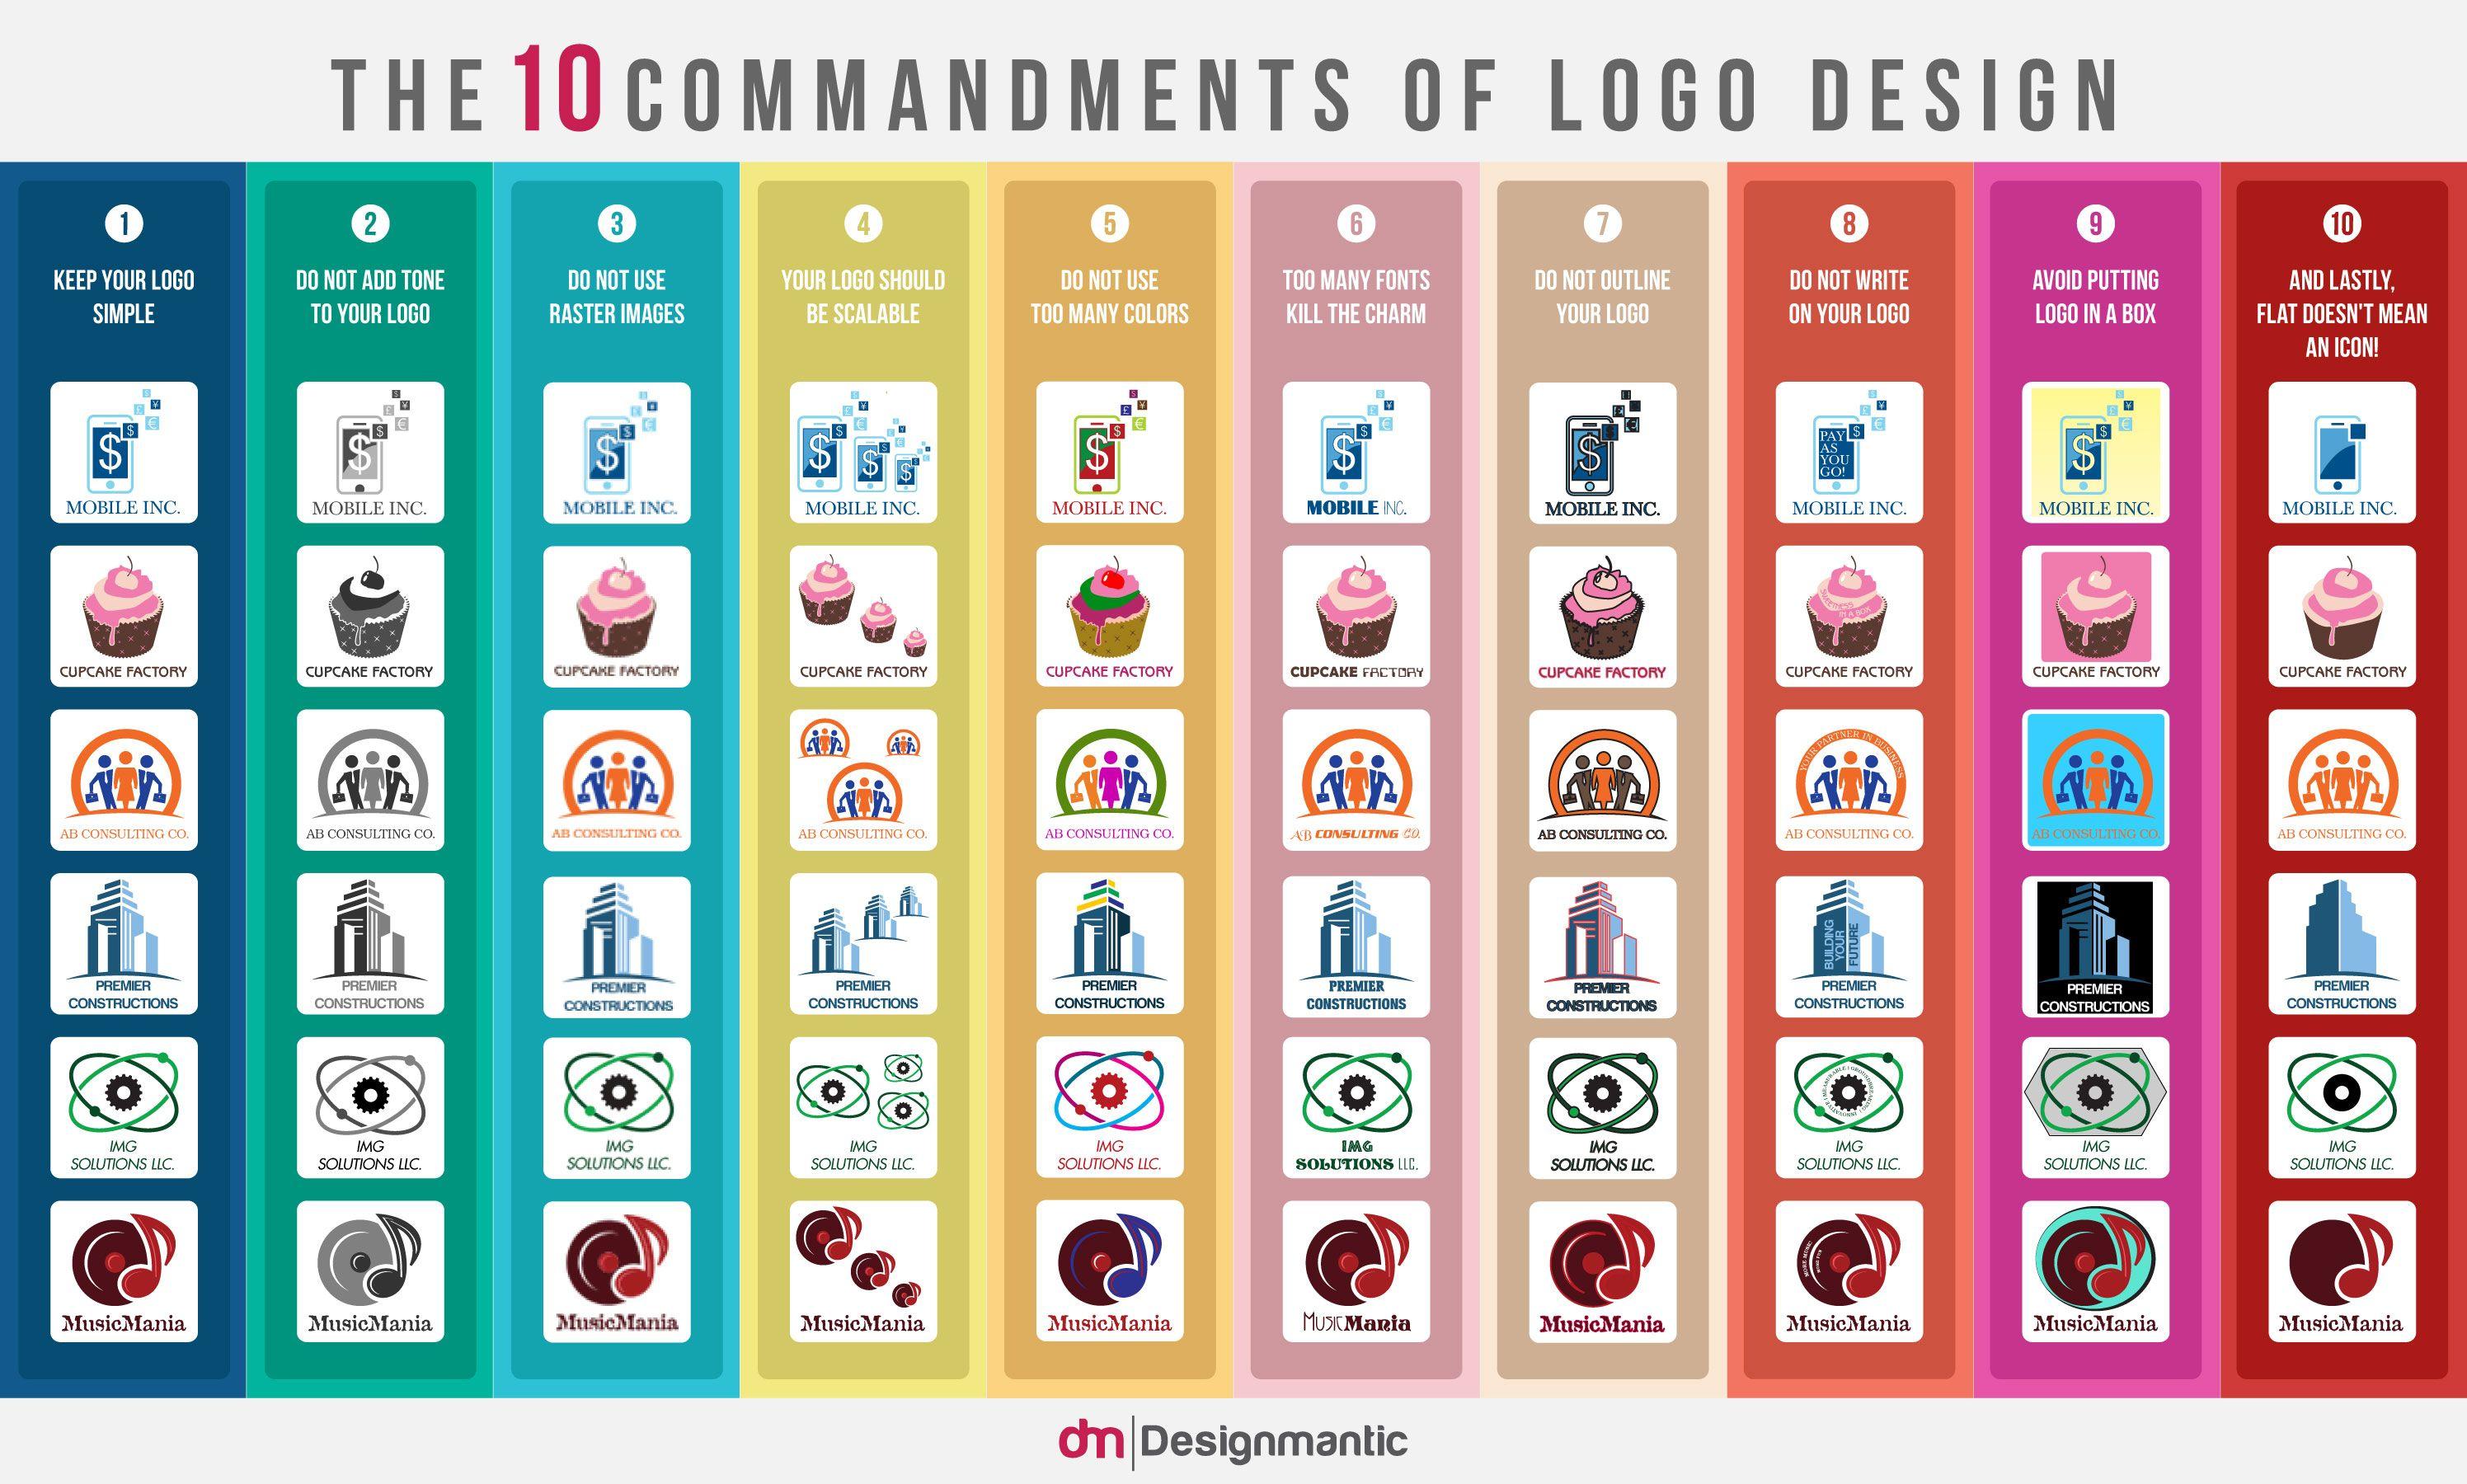 Designa Logo - Infographic that shows the 10 commandments of logo design | Creative ...